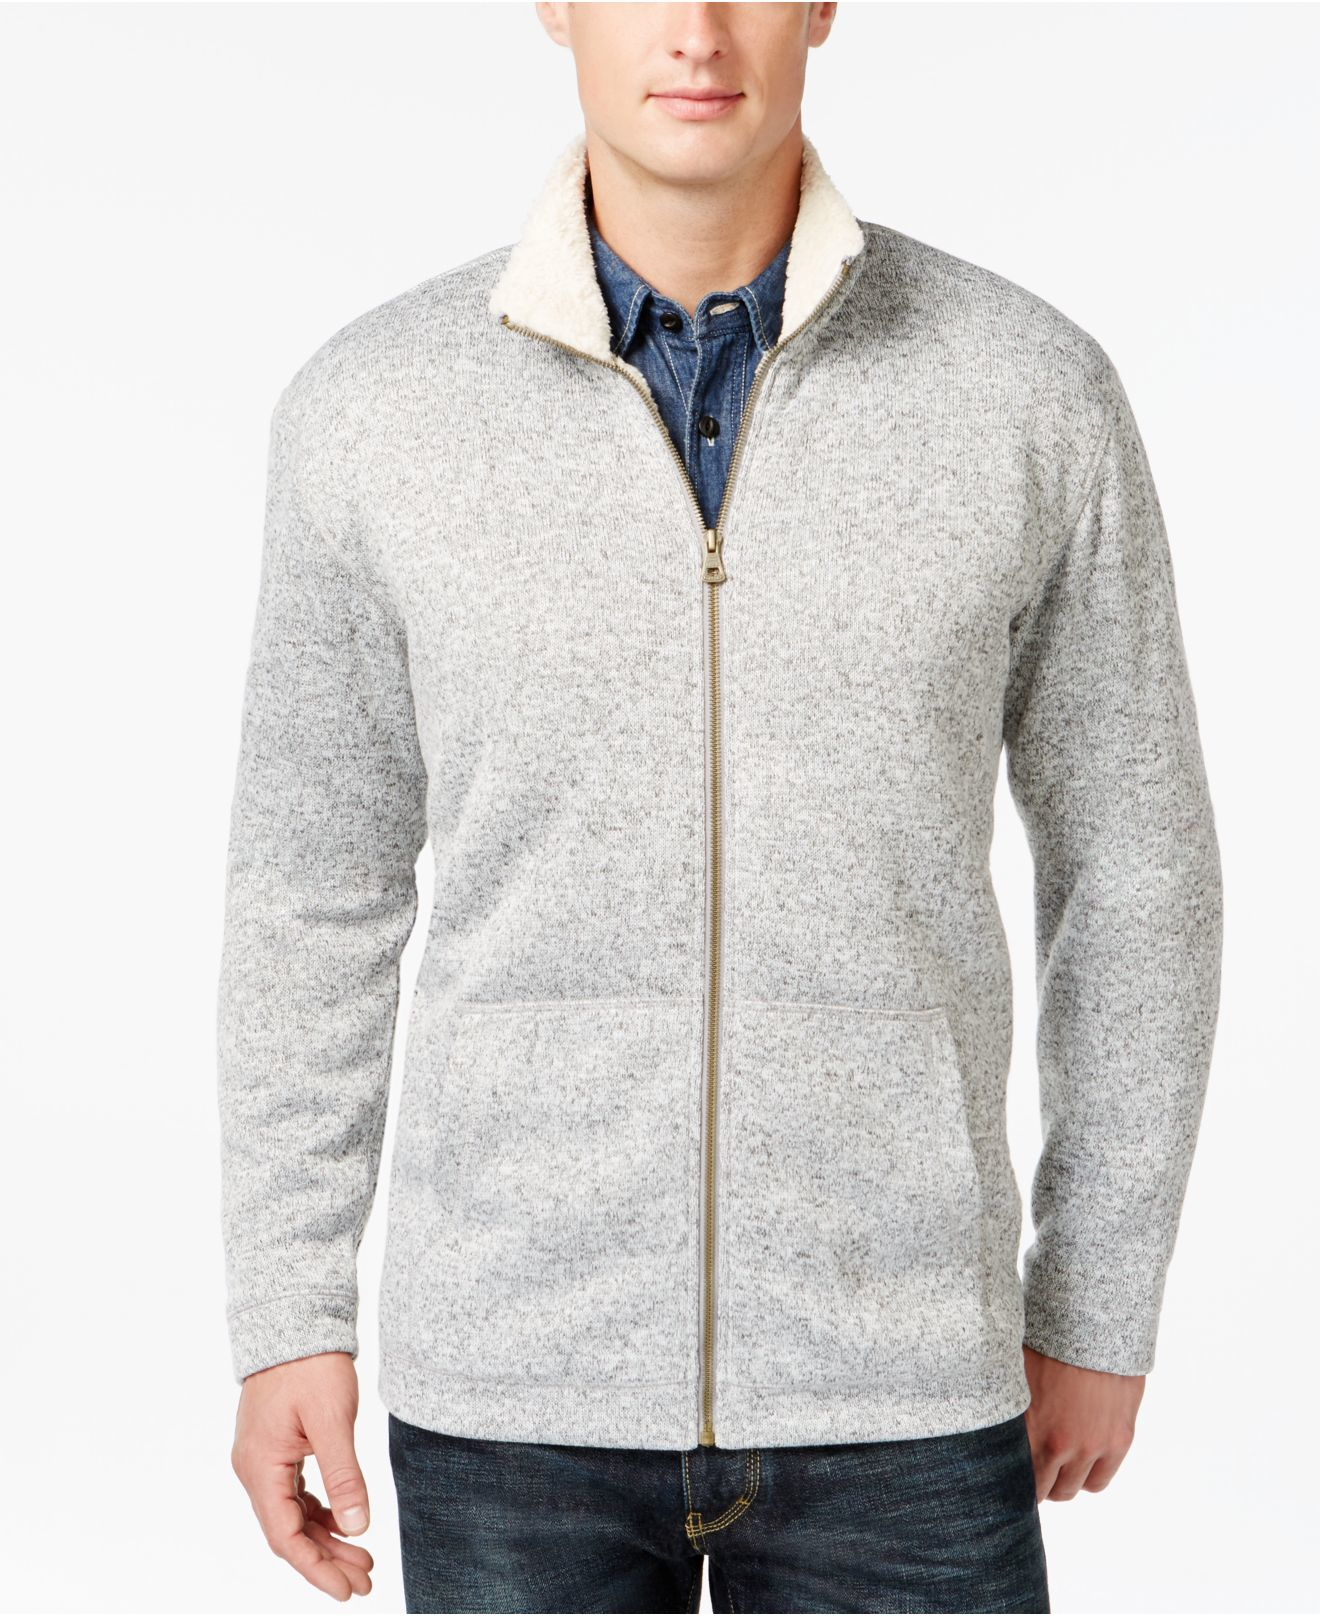 Lyst - Weatherproof Vintage Knit Full-zip Mock-neck Jacket in Gray for Men